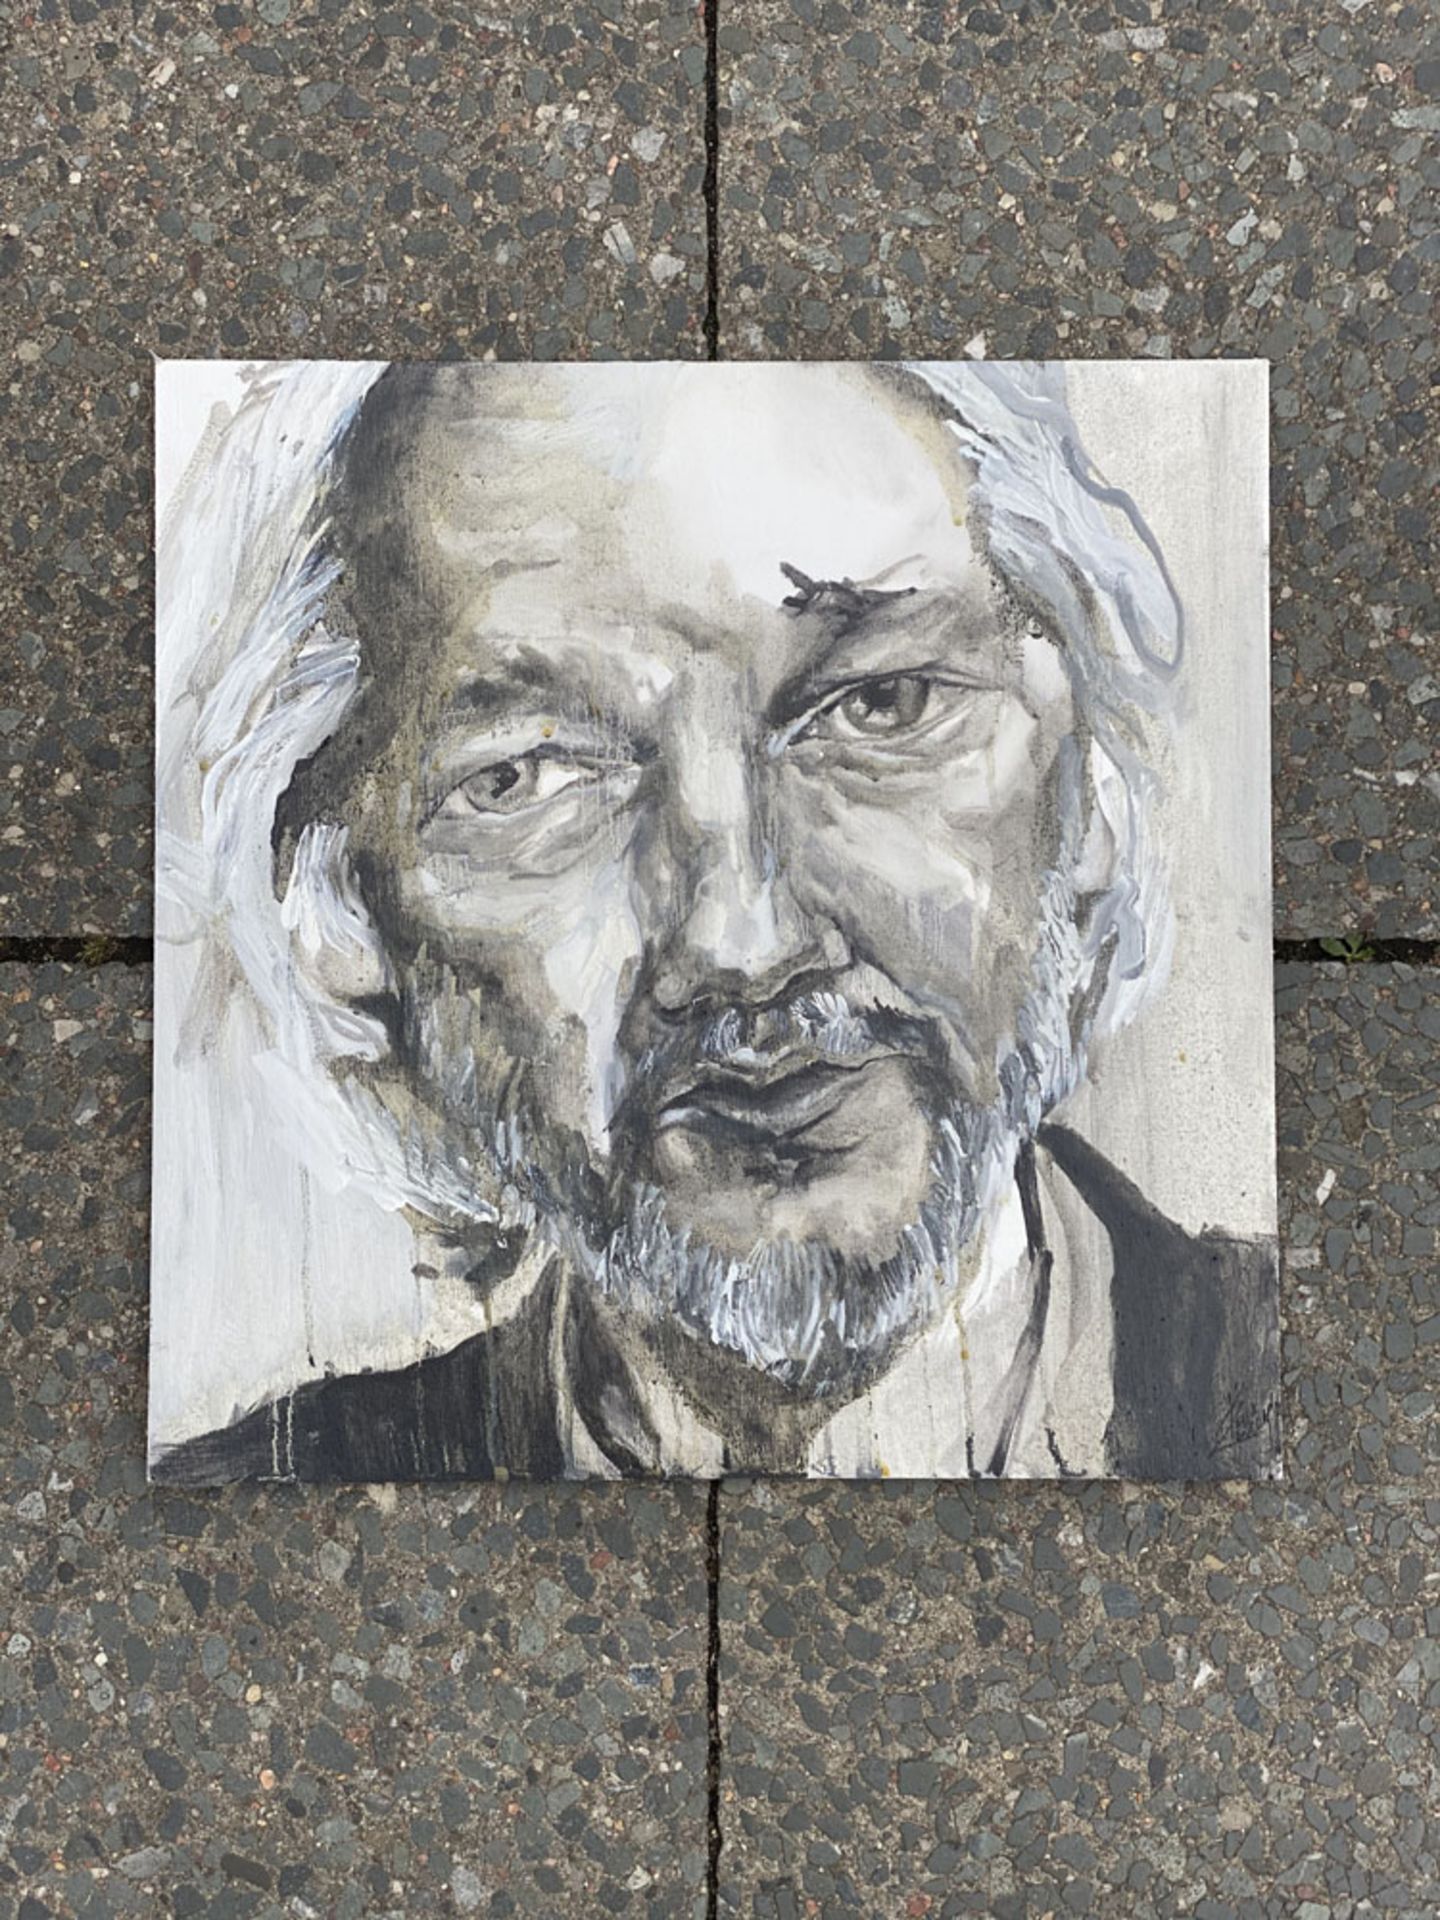 146 - - Carla Canellas. Assange. 2017. Oil on wood. Unikat. 40 x 40 cm. Signed on the